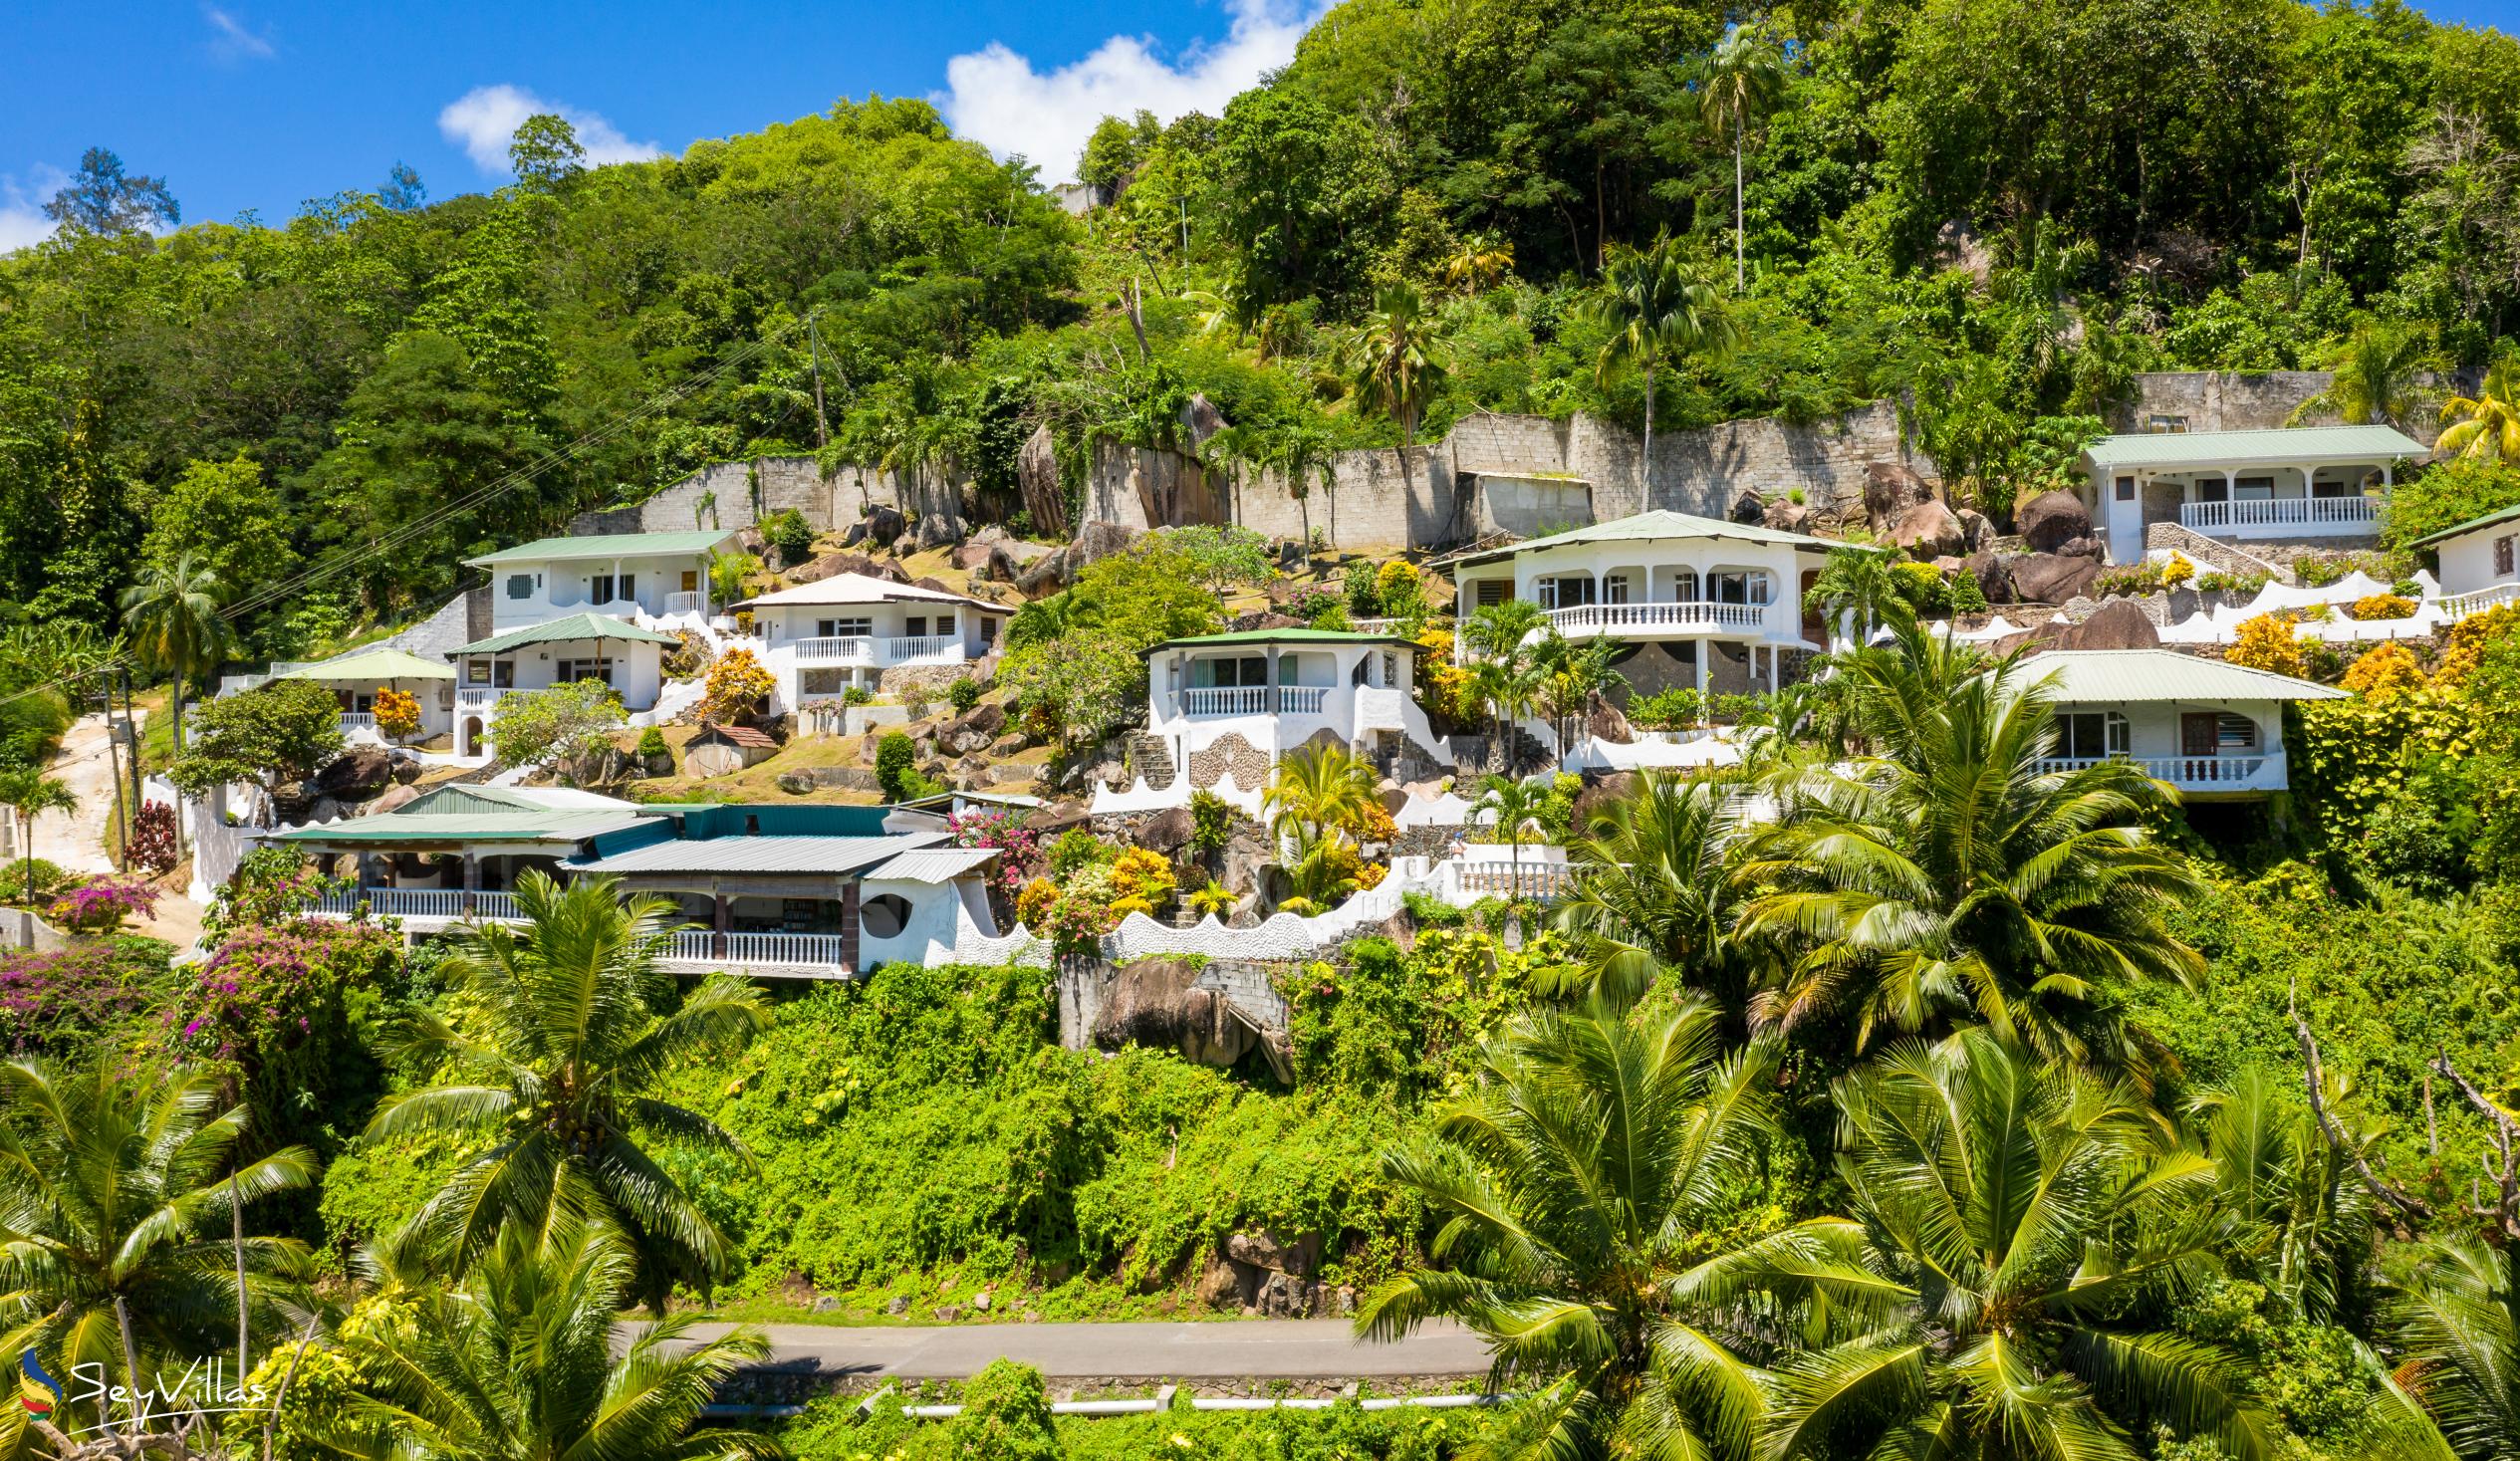 Photo 6: Lazare Picault Hotel - Outdoor area - Mahé (Seychelles)